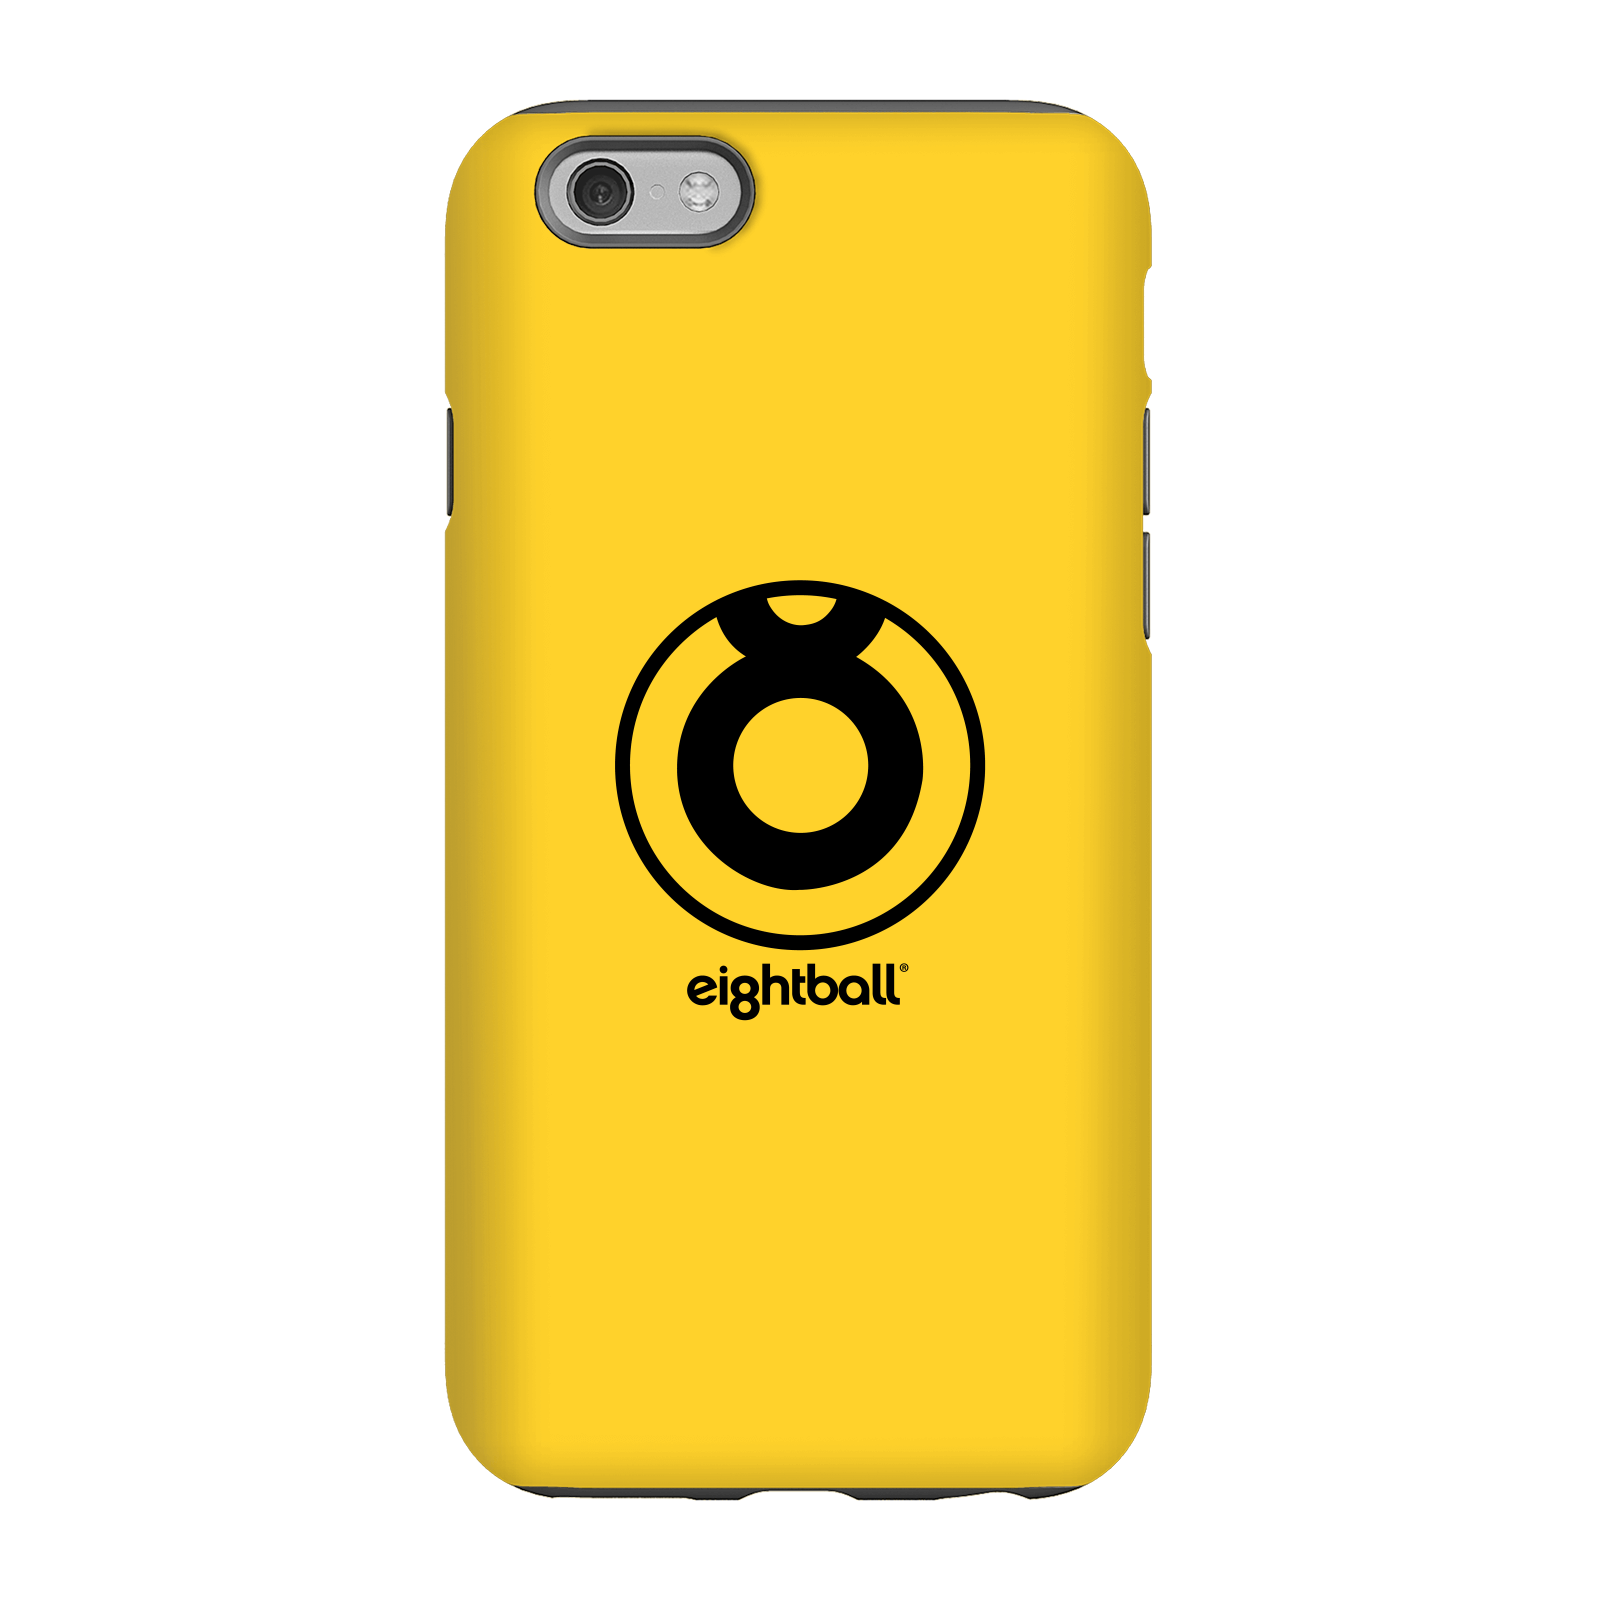 Funda Móvil Ei8htball Large Circle Logo para iPhone y Android - iPhone 6S - Carcasa doble capa - Brillante